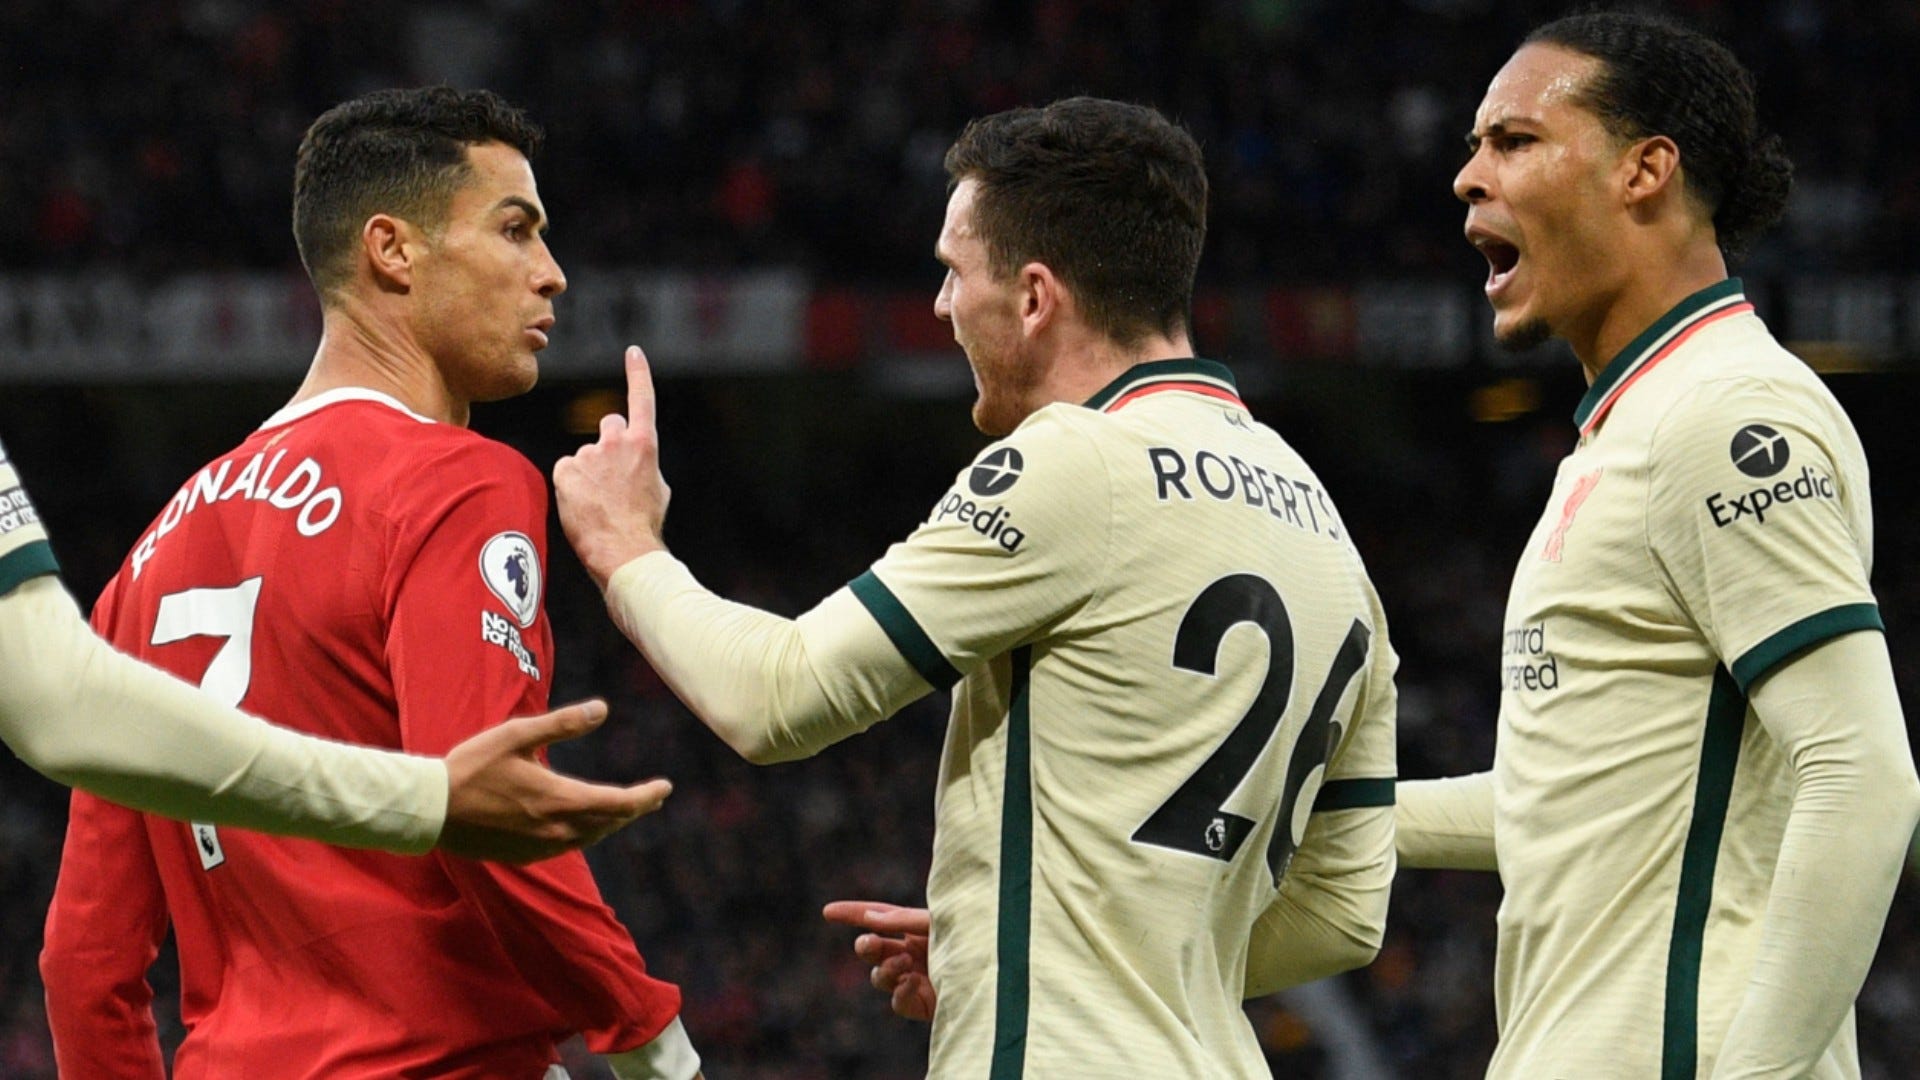 Cristiano Ronaldo Andy Robertson Virgil van Dijk Manchester United Liverpool 2021-22